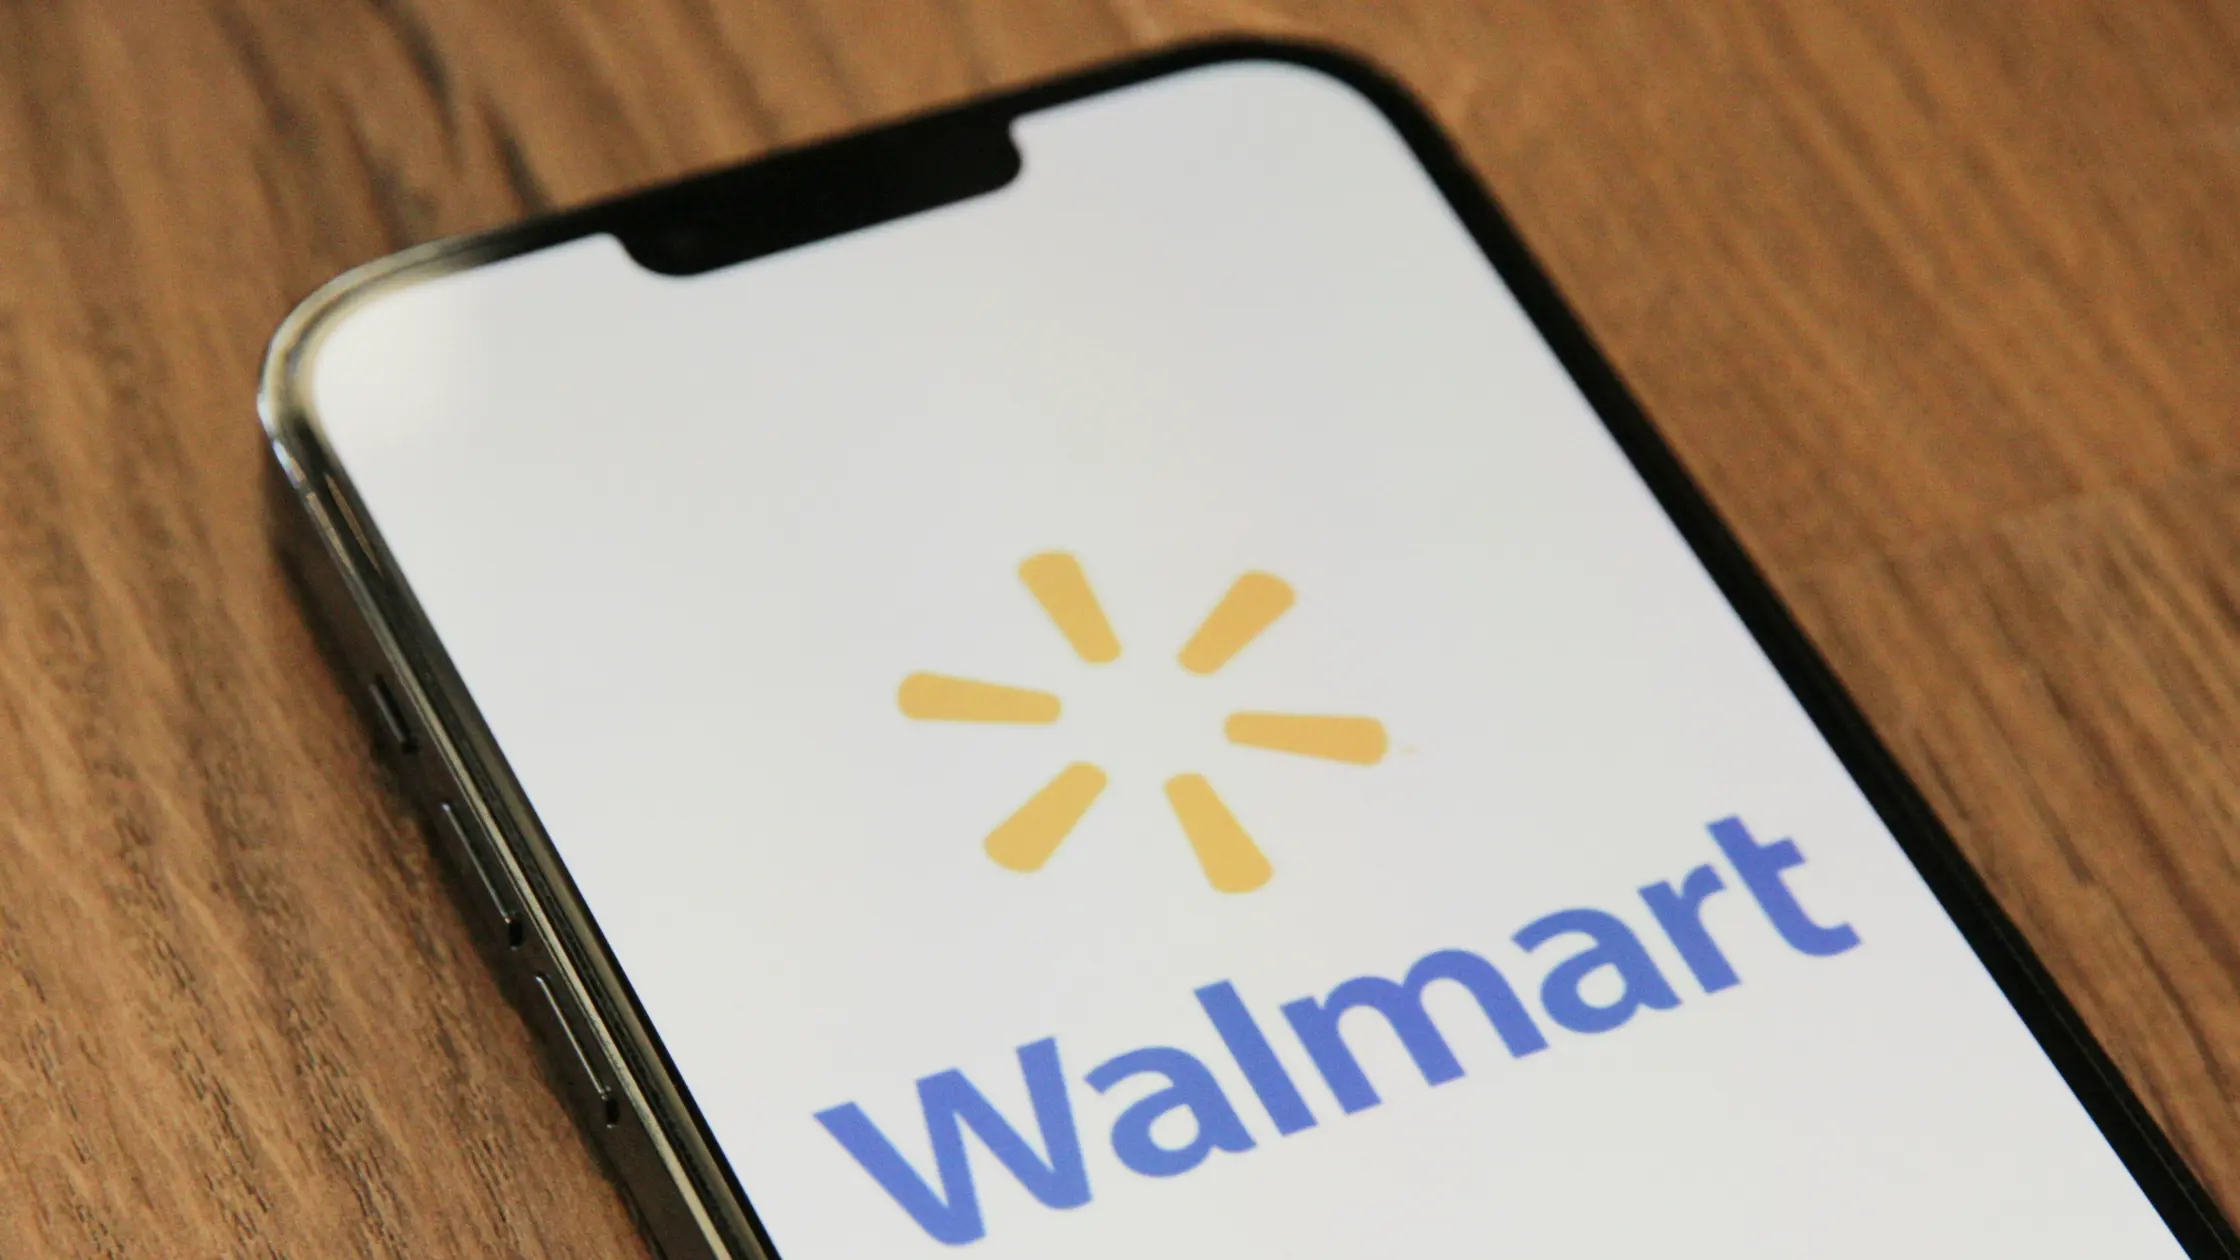 Walmart's Strategic Expansion Ahead